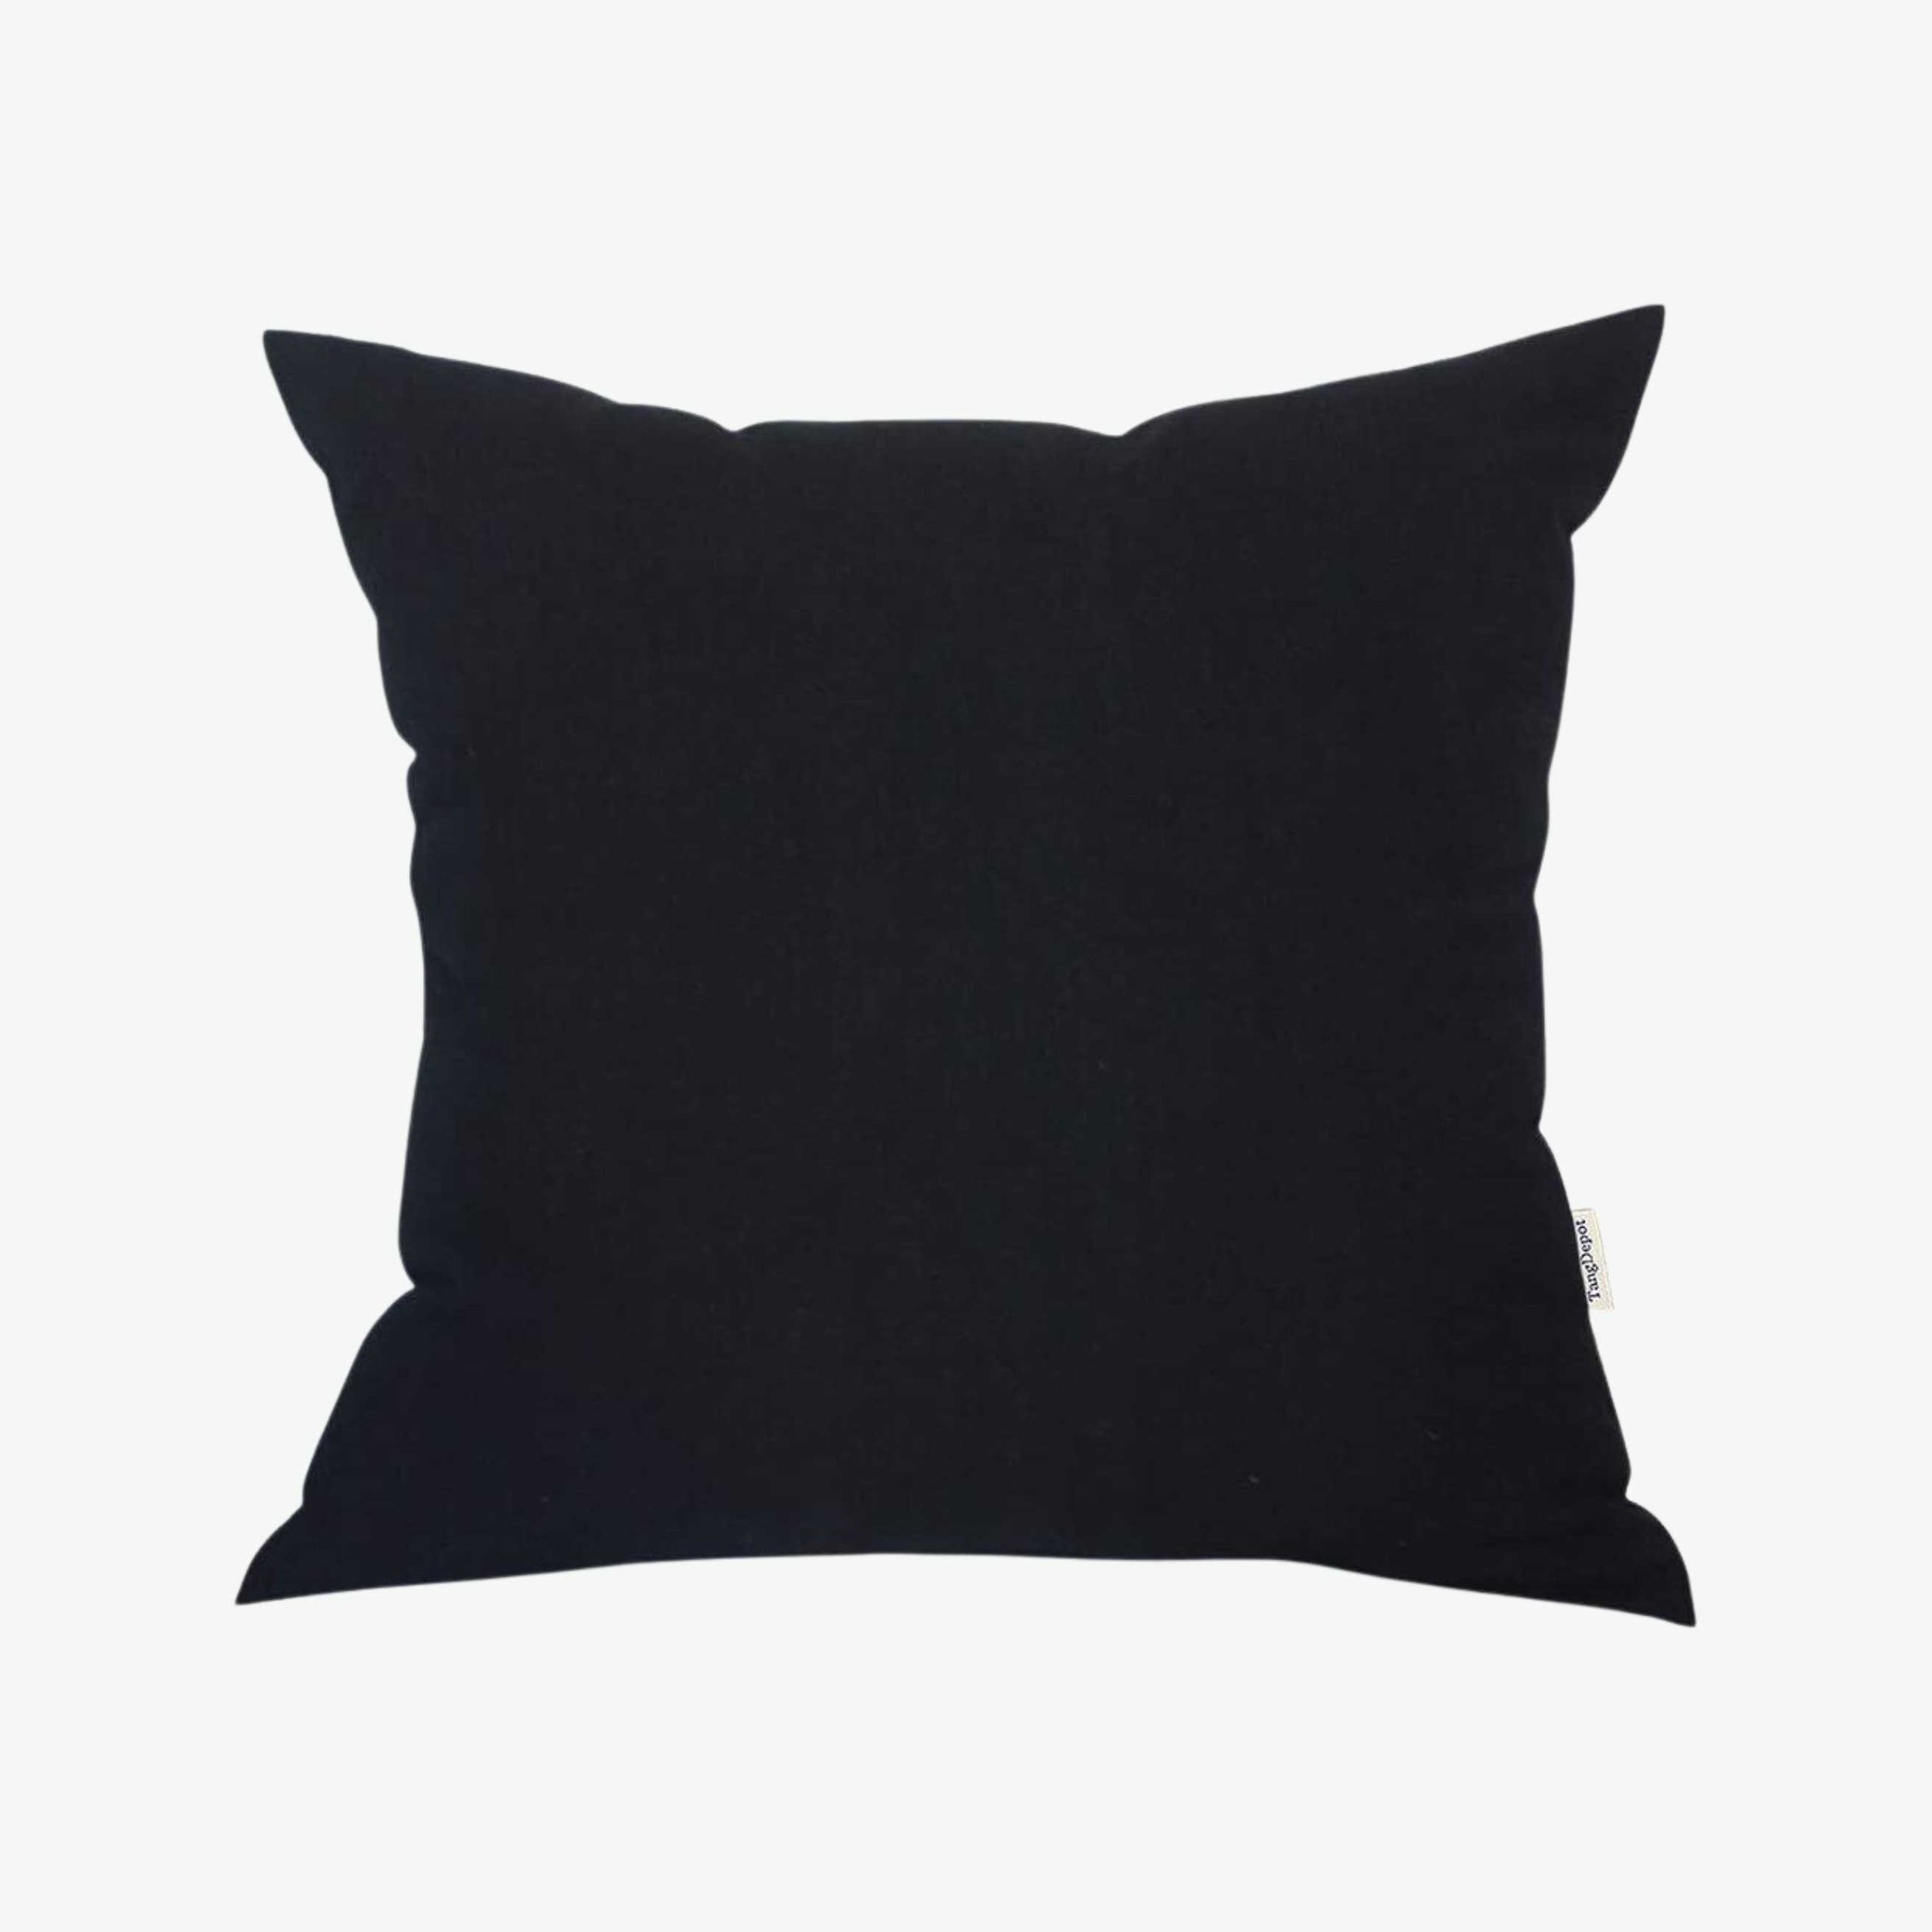 Black Square Throw Pillow.jpg